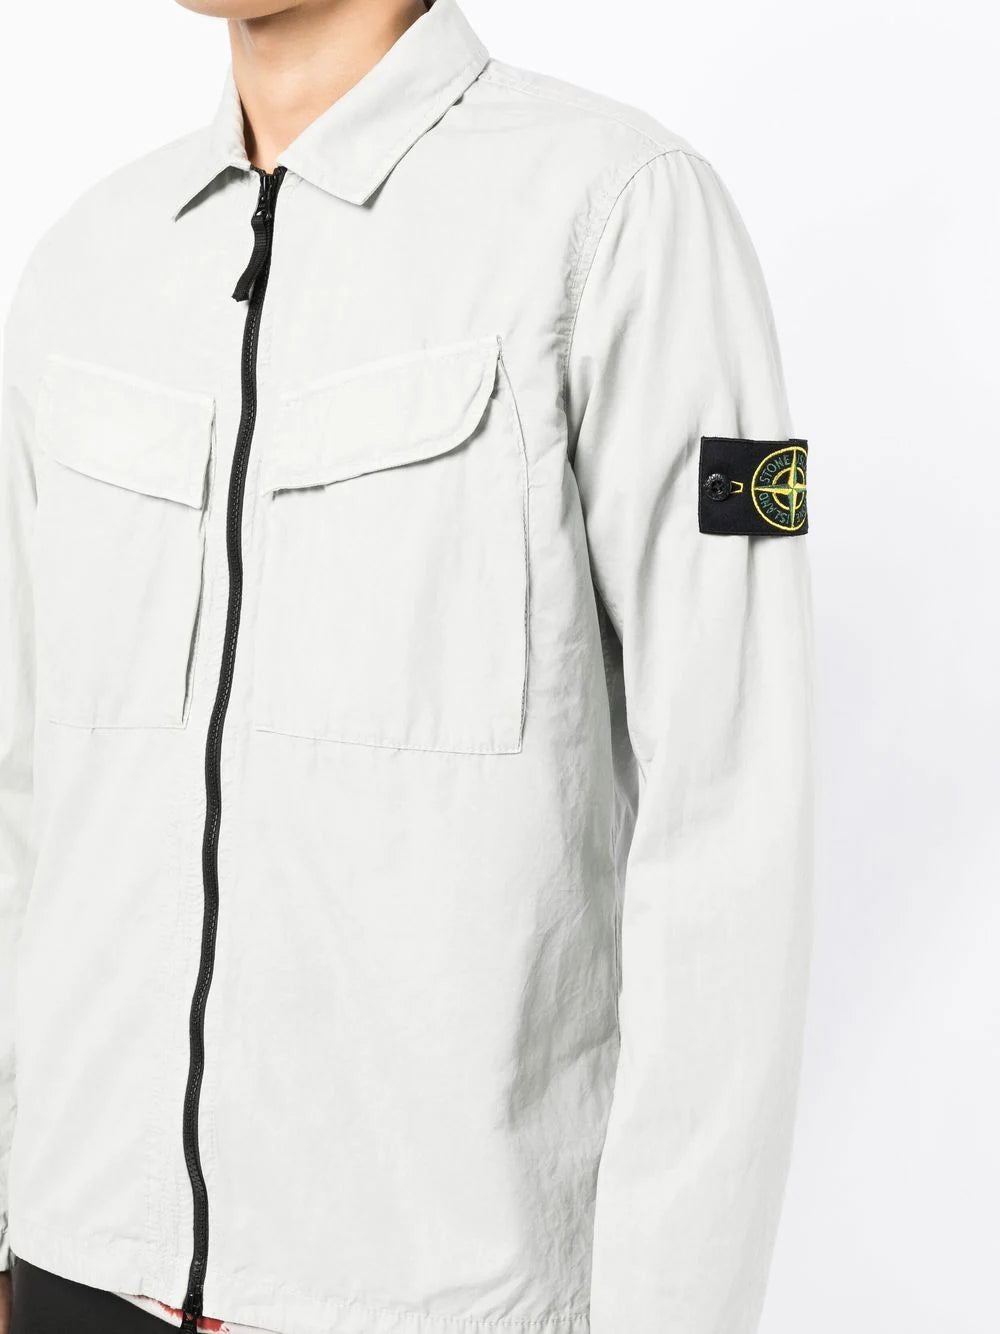 STONE ISLAND Compass-patch Shirt Jacket Light Grey - MAISONDEFASHION.COM